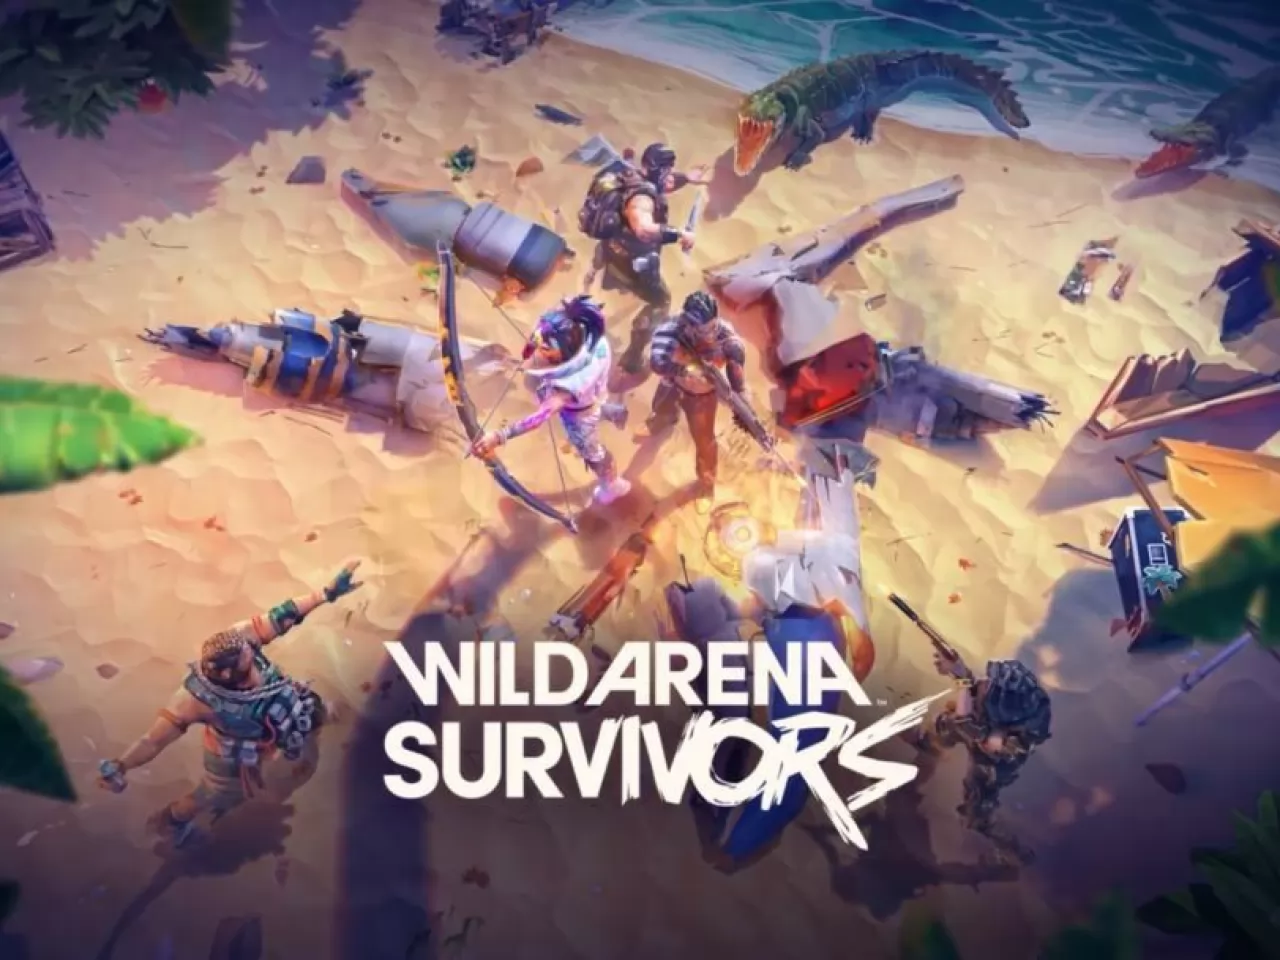 Wild Arena Survivors: تم إصدار لعبة باتل رويال الجديد من Ubisoft في مناطق محددة